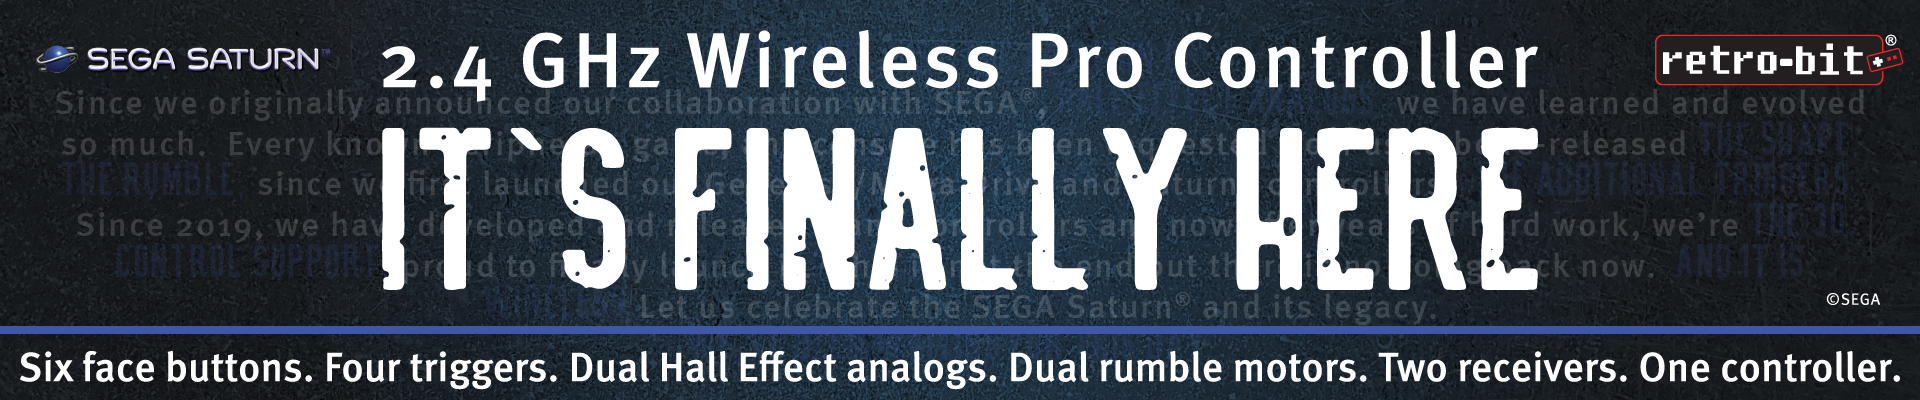 SEGA Saturn 2.4 GHz Wireless Pro Controller - It's finally here!